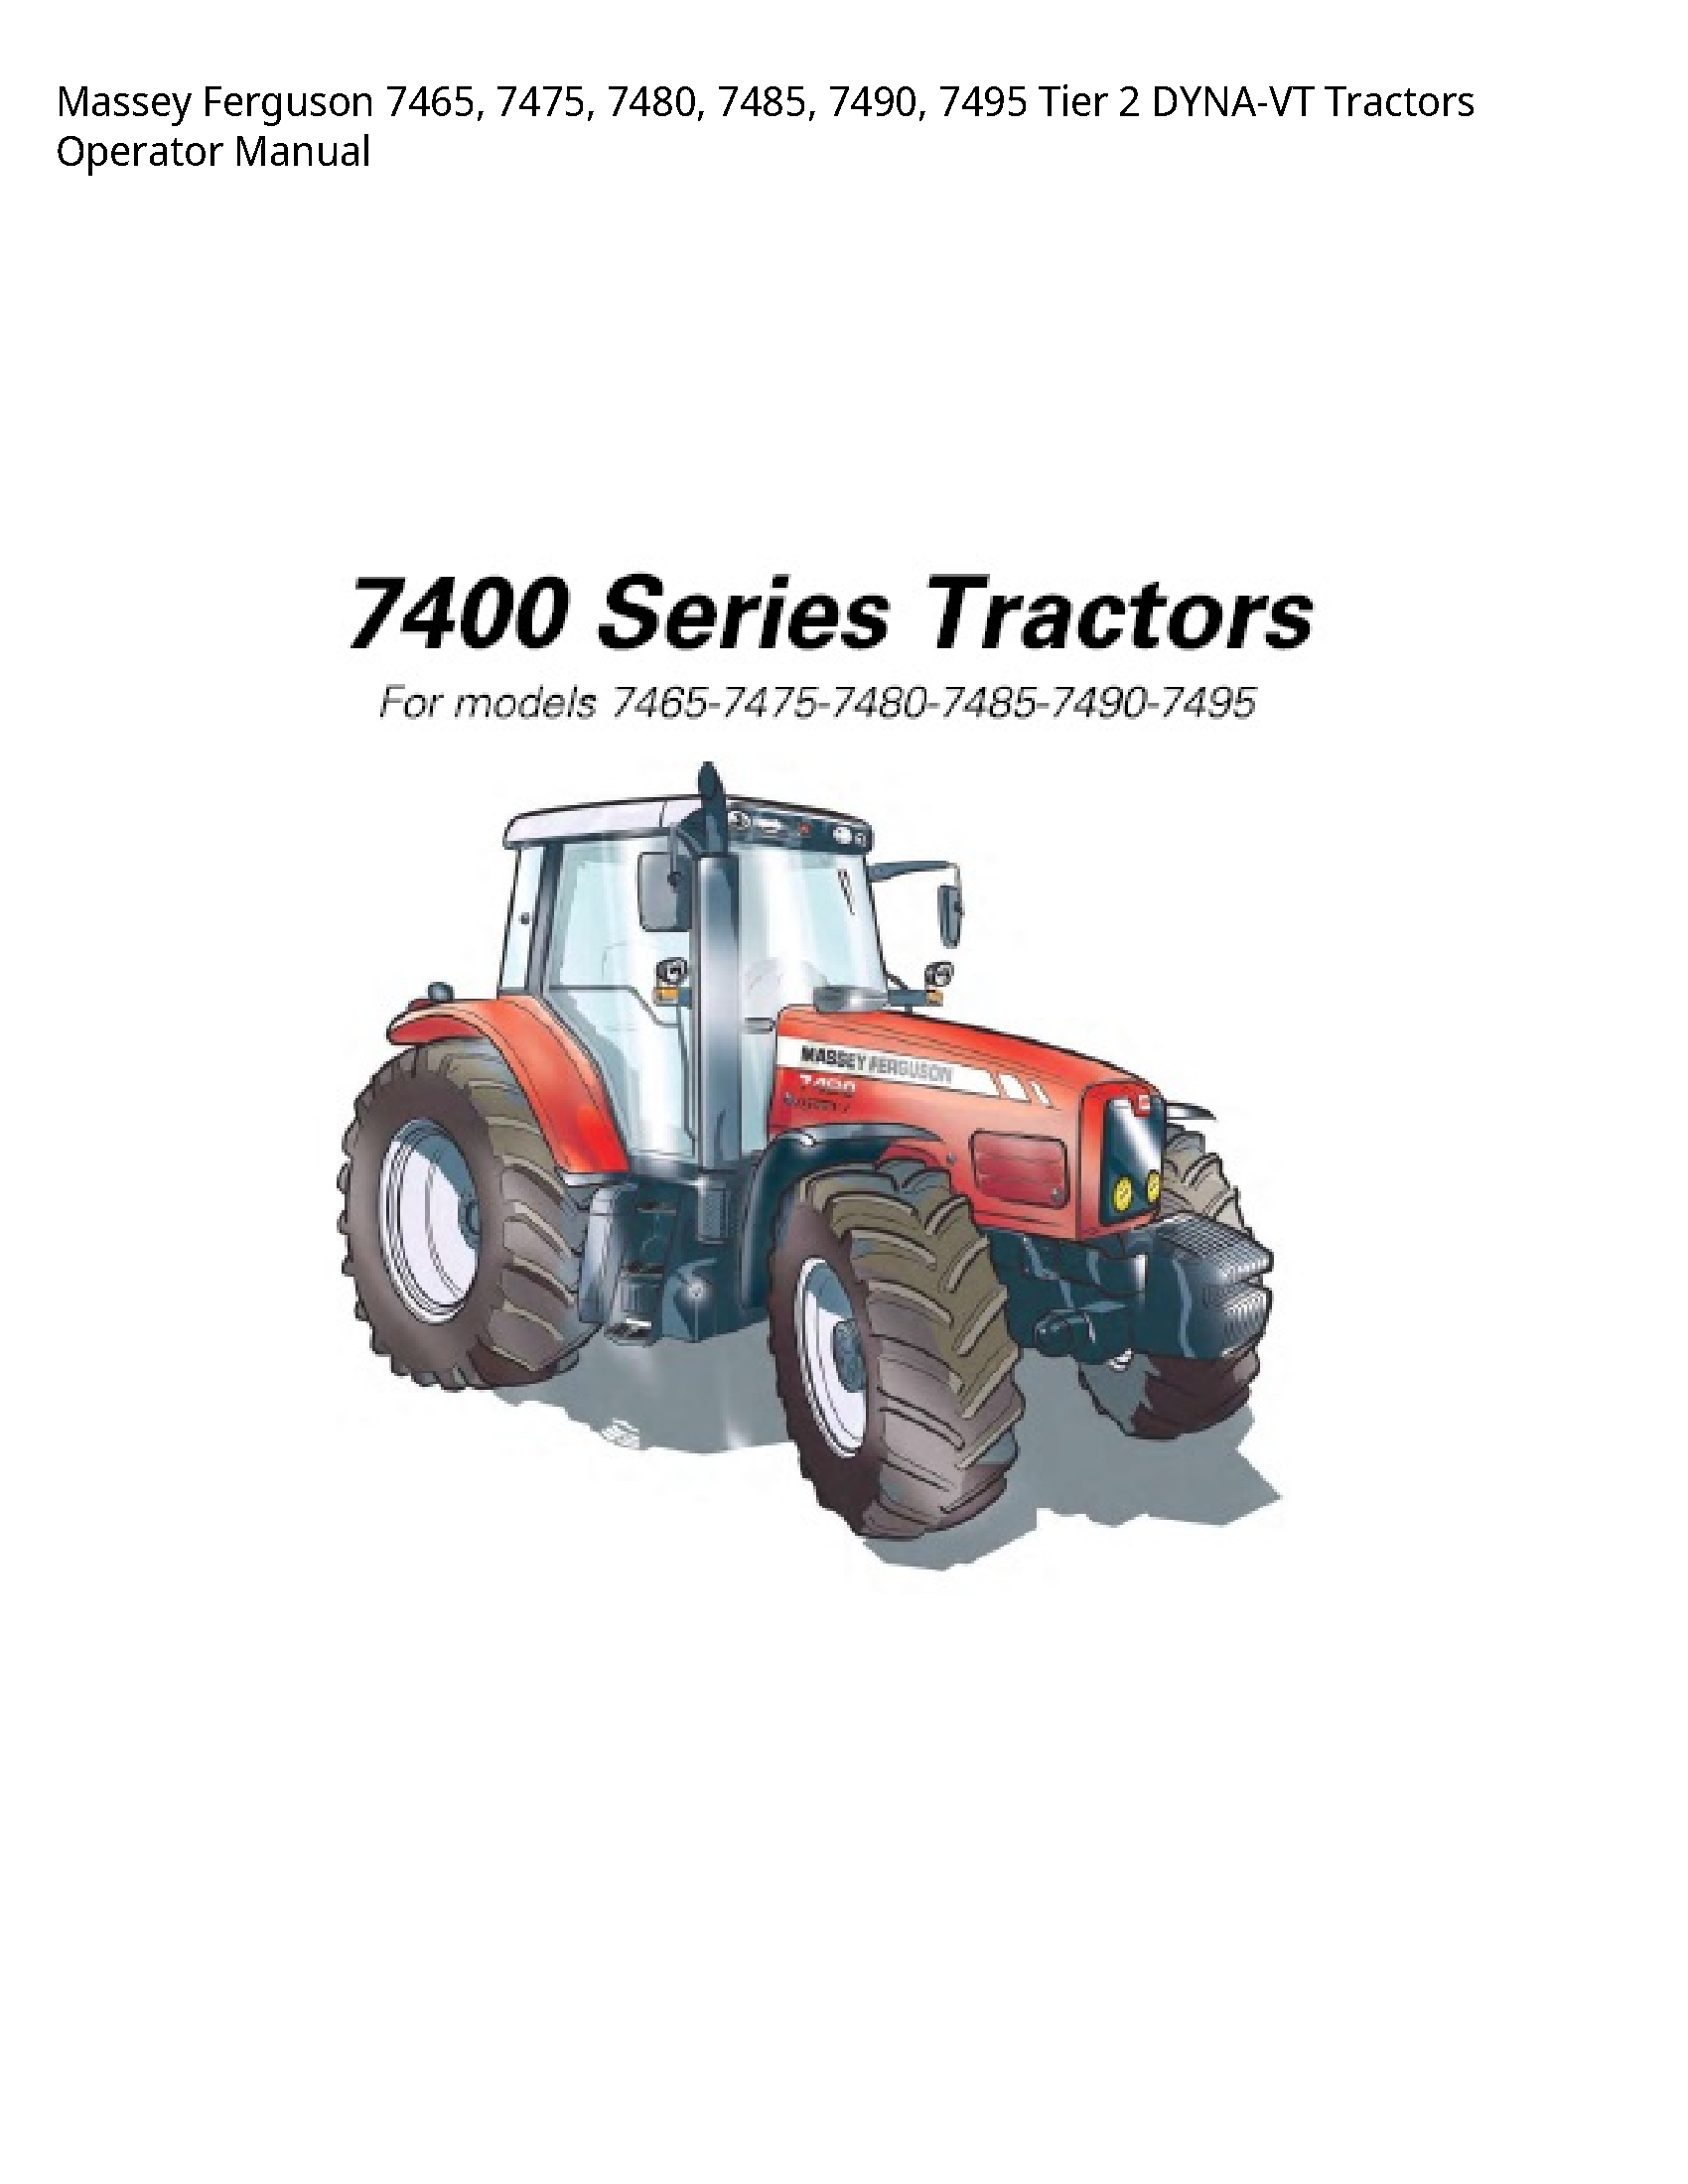 Massey Ferguson 7465 Tier DYNA-VT Tractors Operator manual